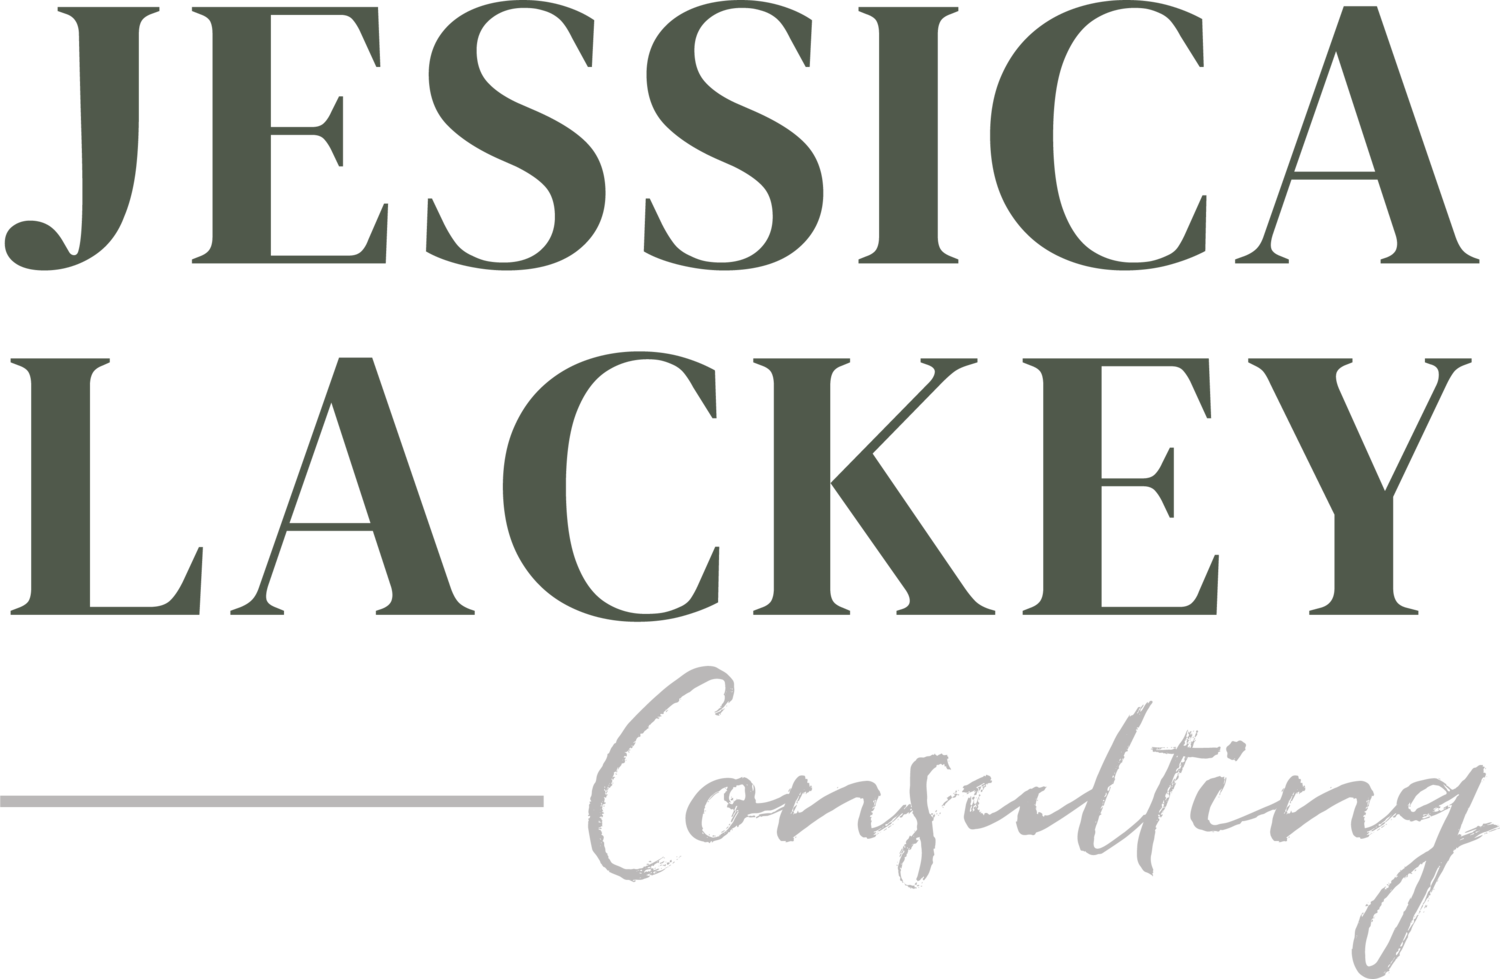 Jessica Lackey Consulting